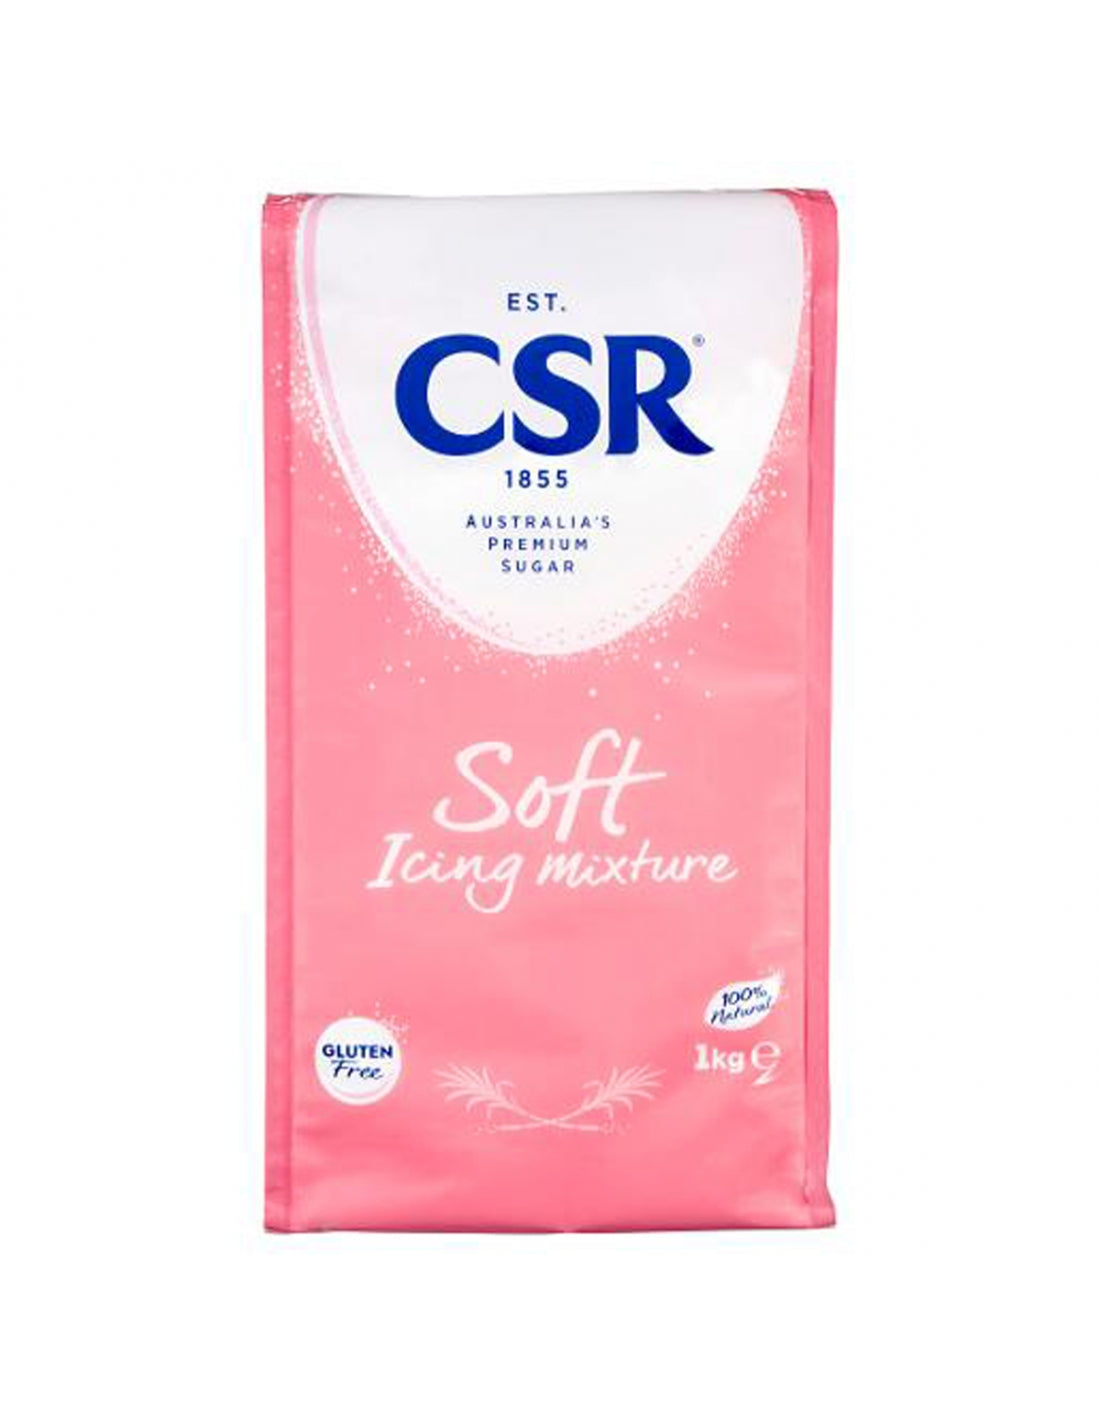 CSR Soft Icing Mixture 1kg